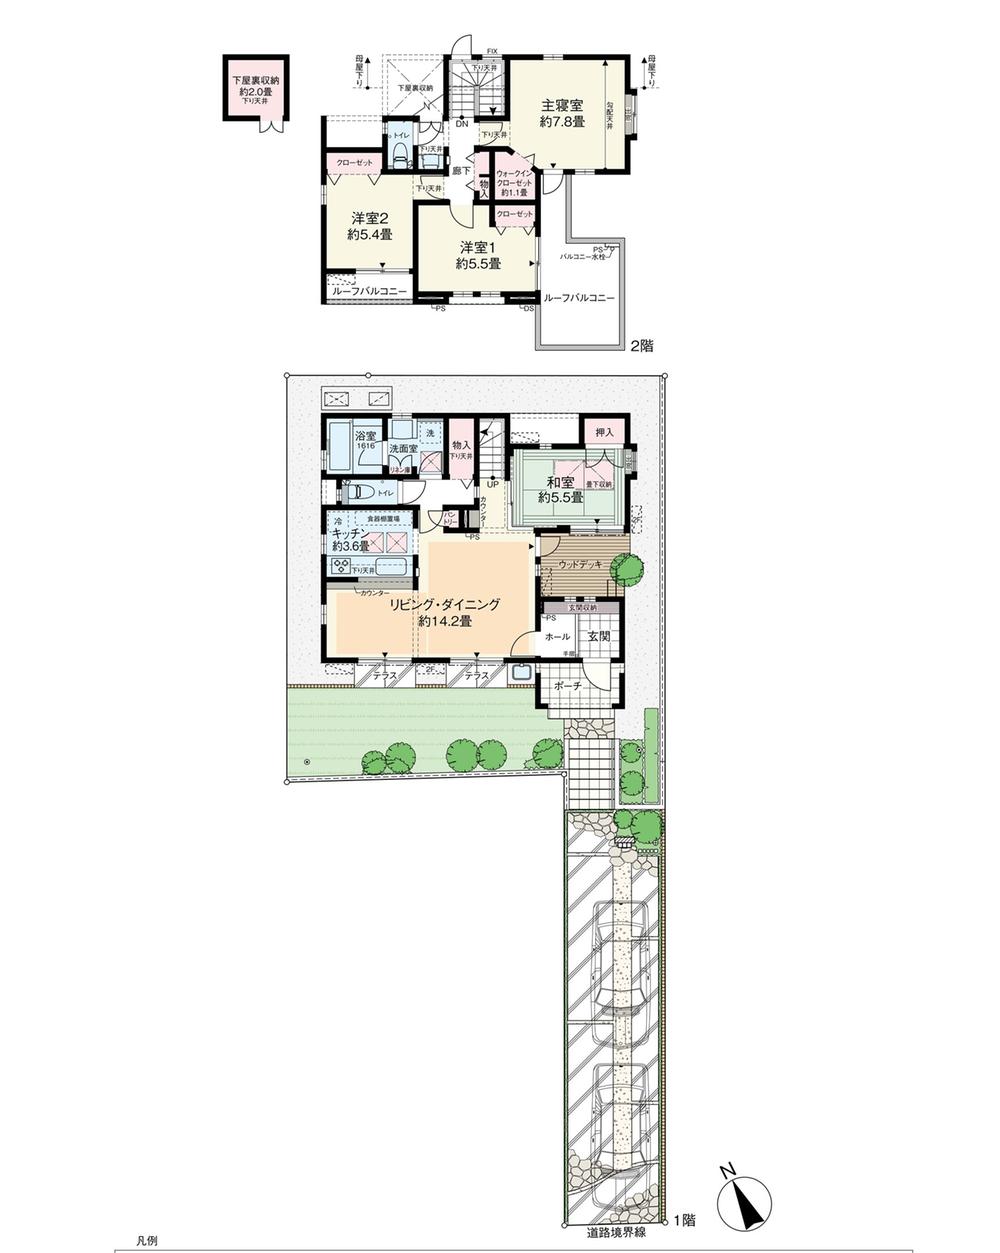 Floor plan. (11-12), Price 50,600,000 yen, 4LDK, Land area 174.6 sq m , Building area 107.24 sq m